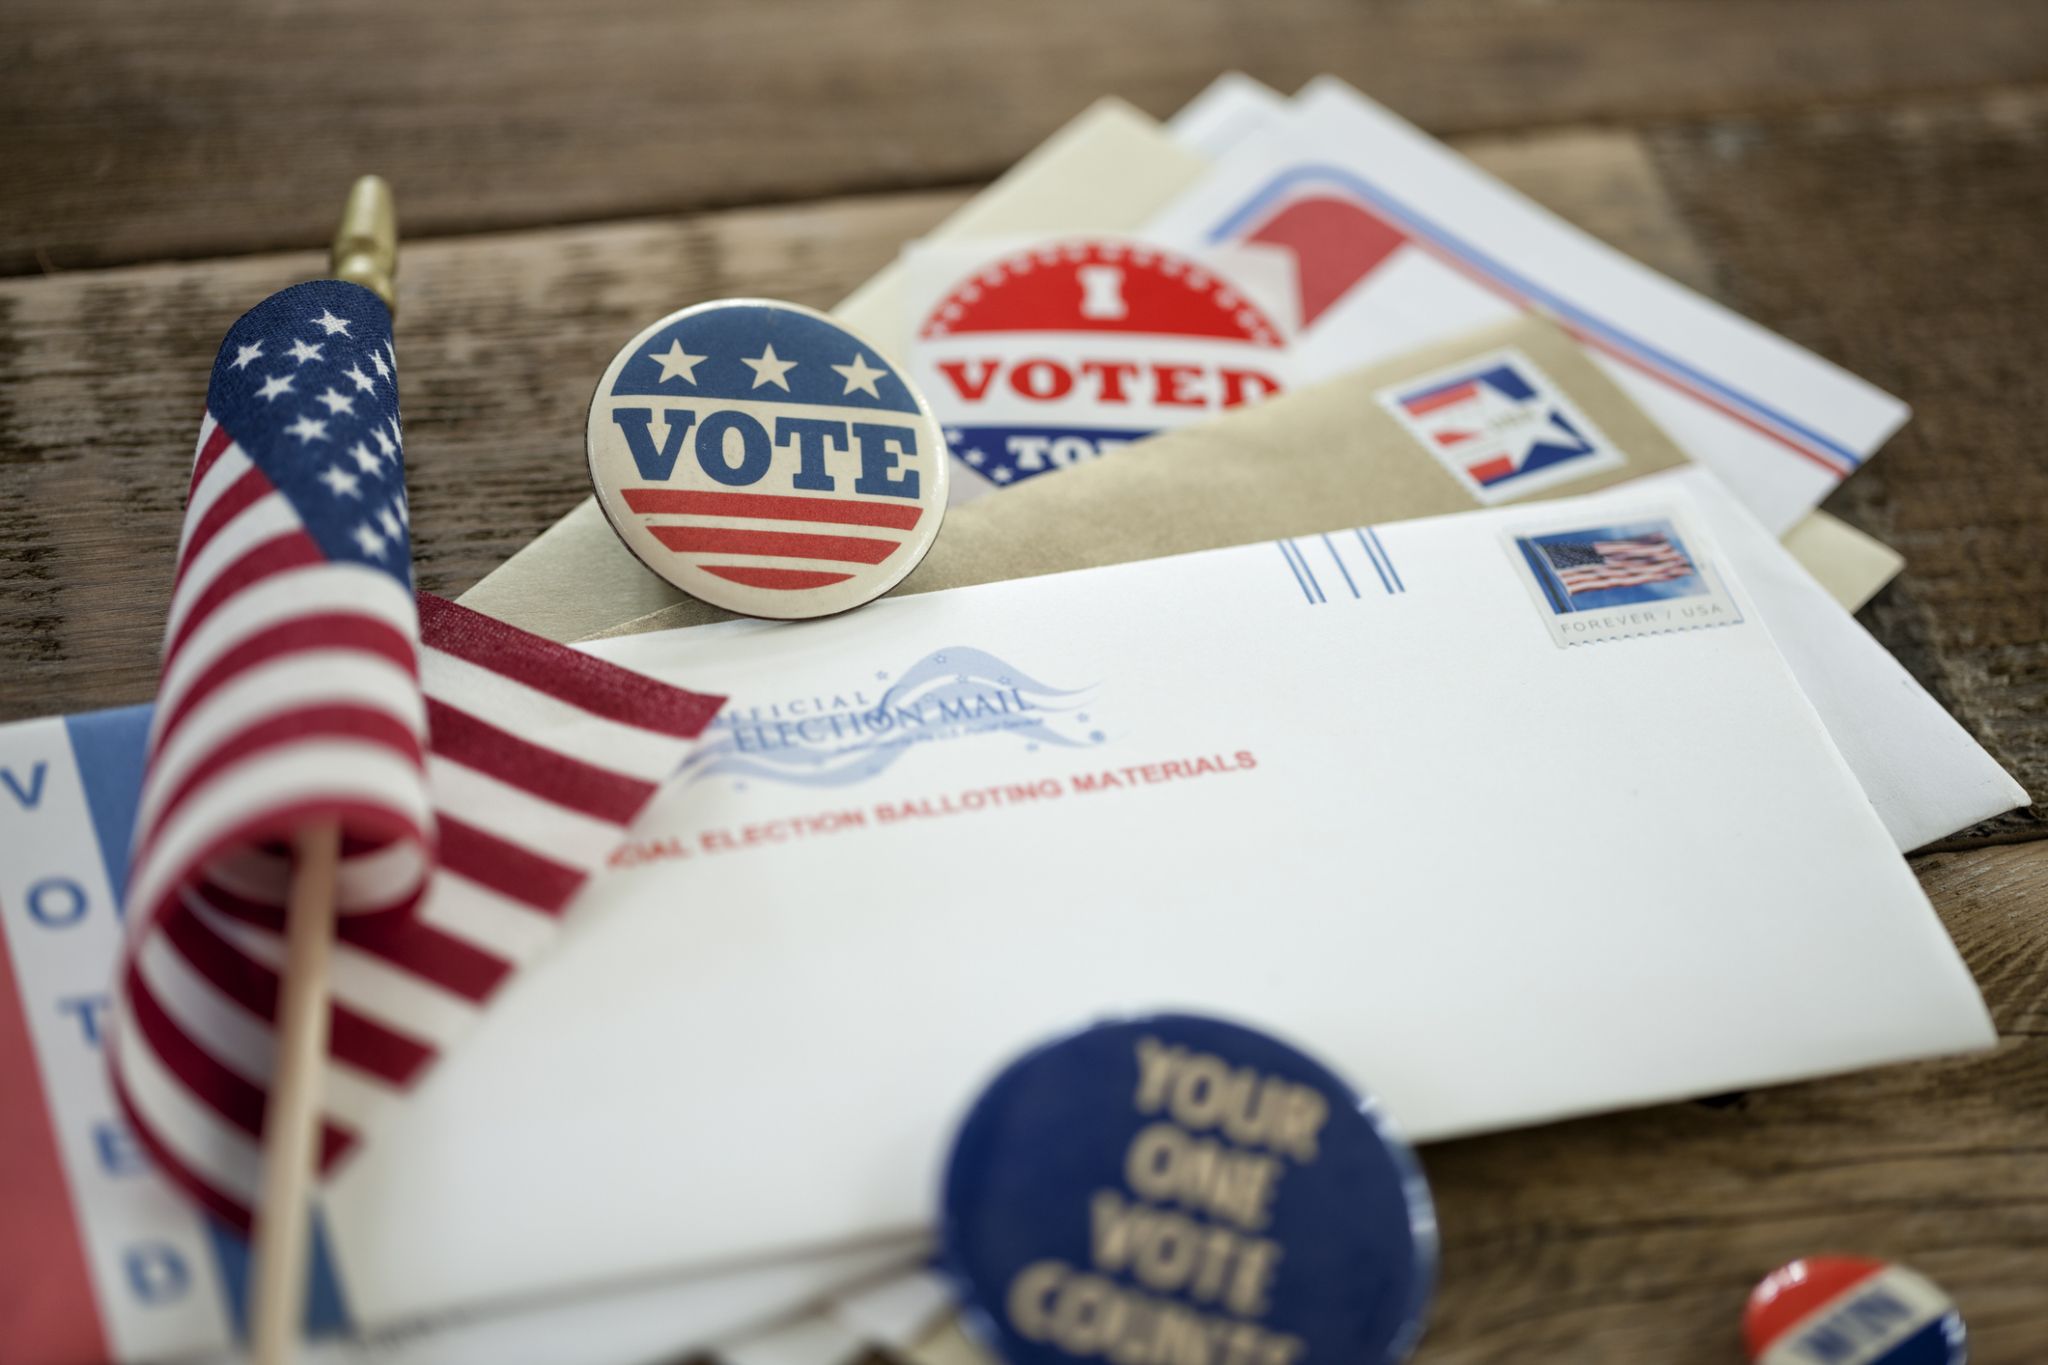 Cut cable shuts down Virginia’s online voter registration